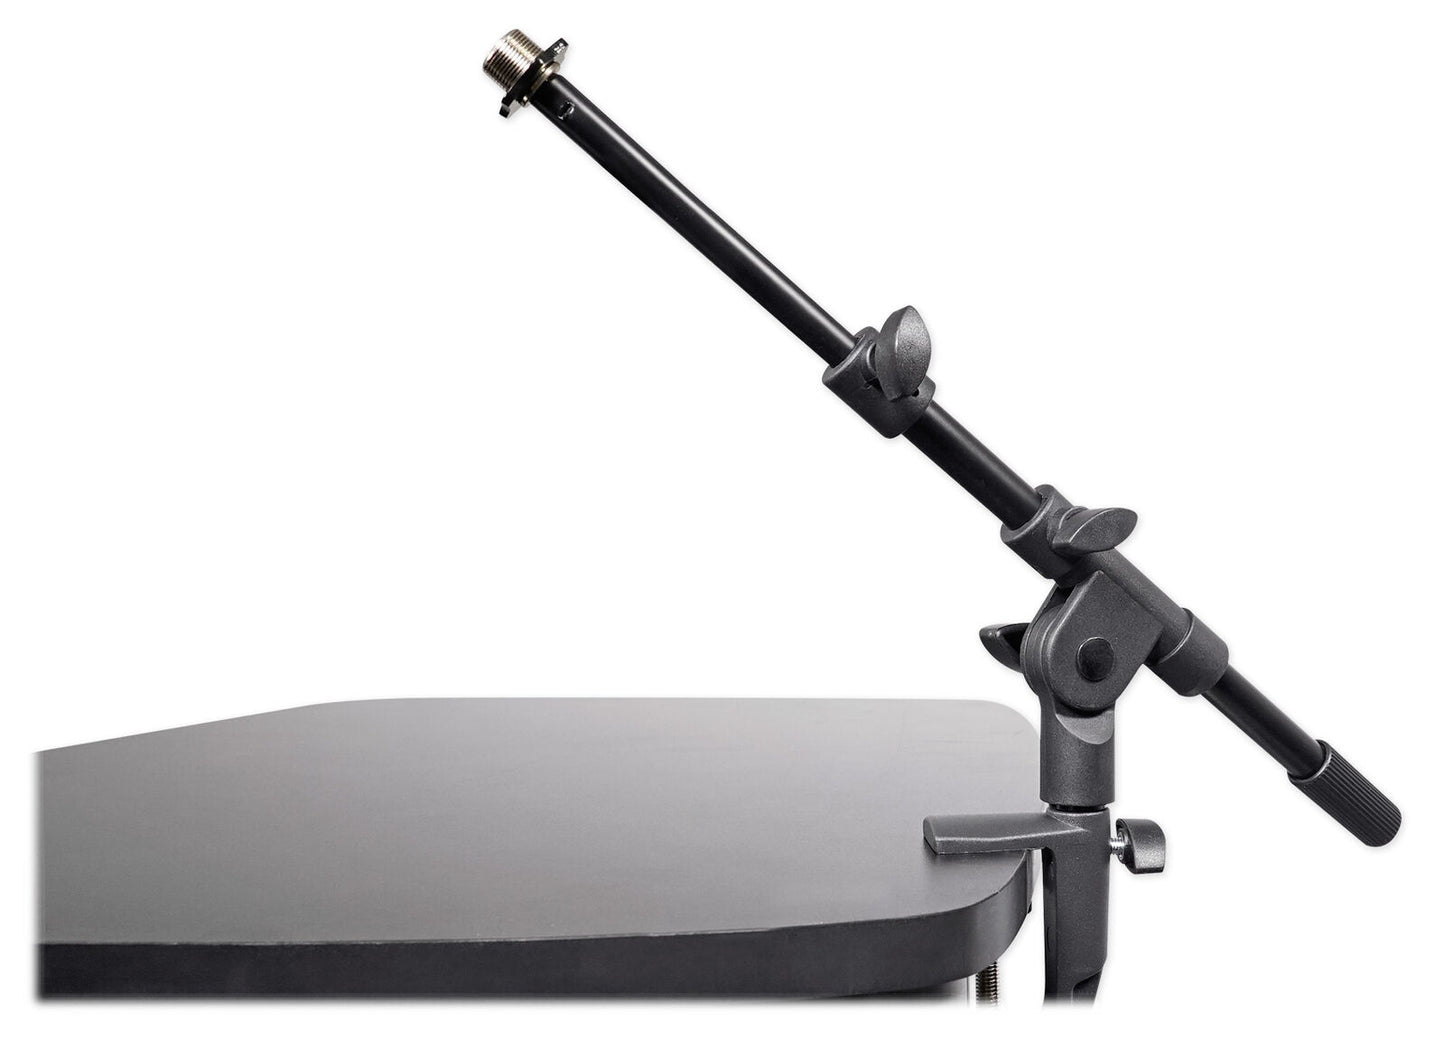 SAMSON MBA18 18-Inch Microphone Boom Arm Suitable for Radio, Podcast and Home Studio Setup